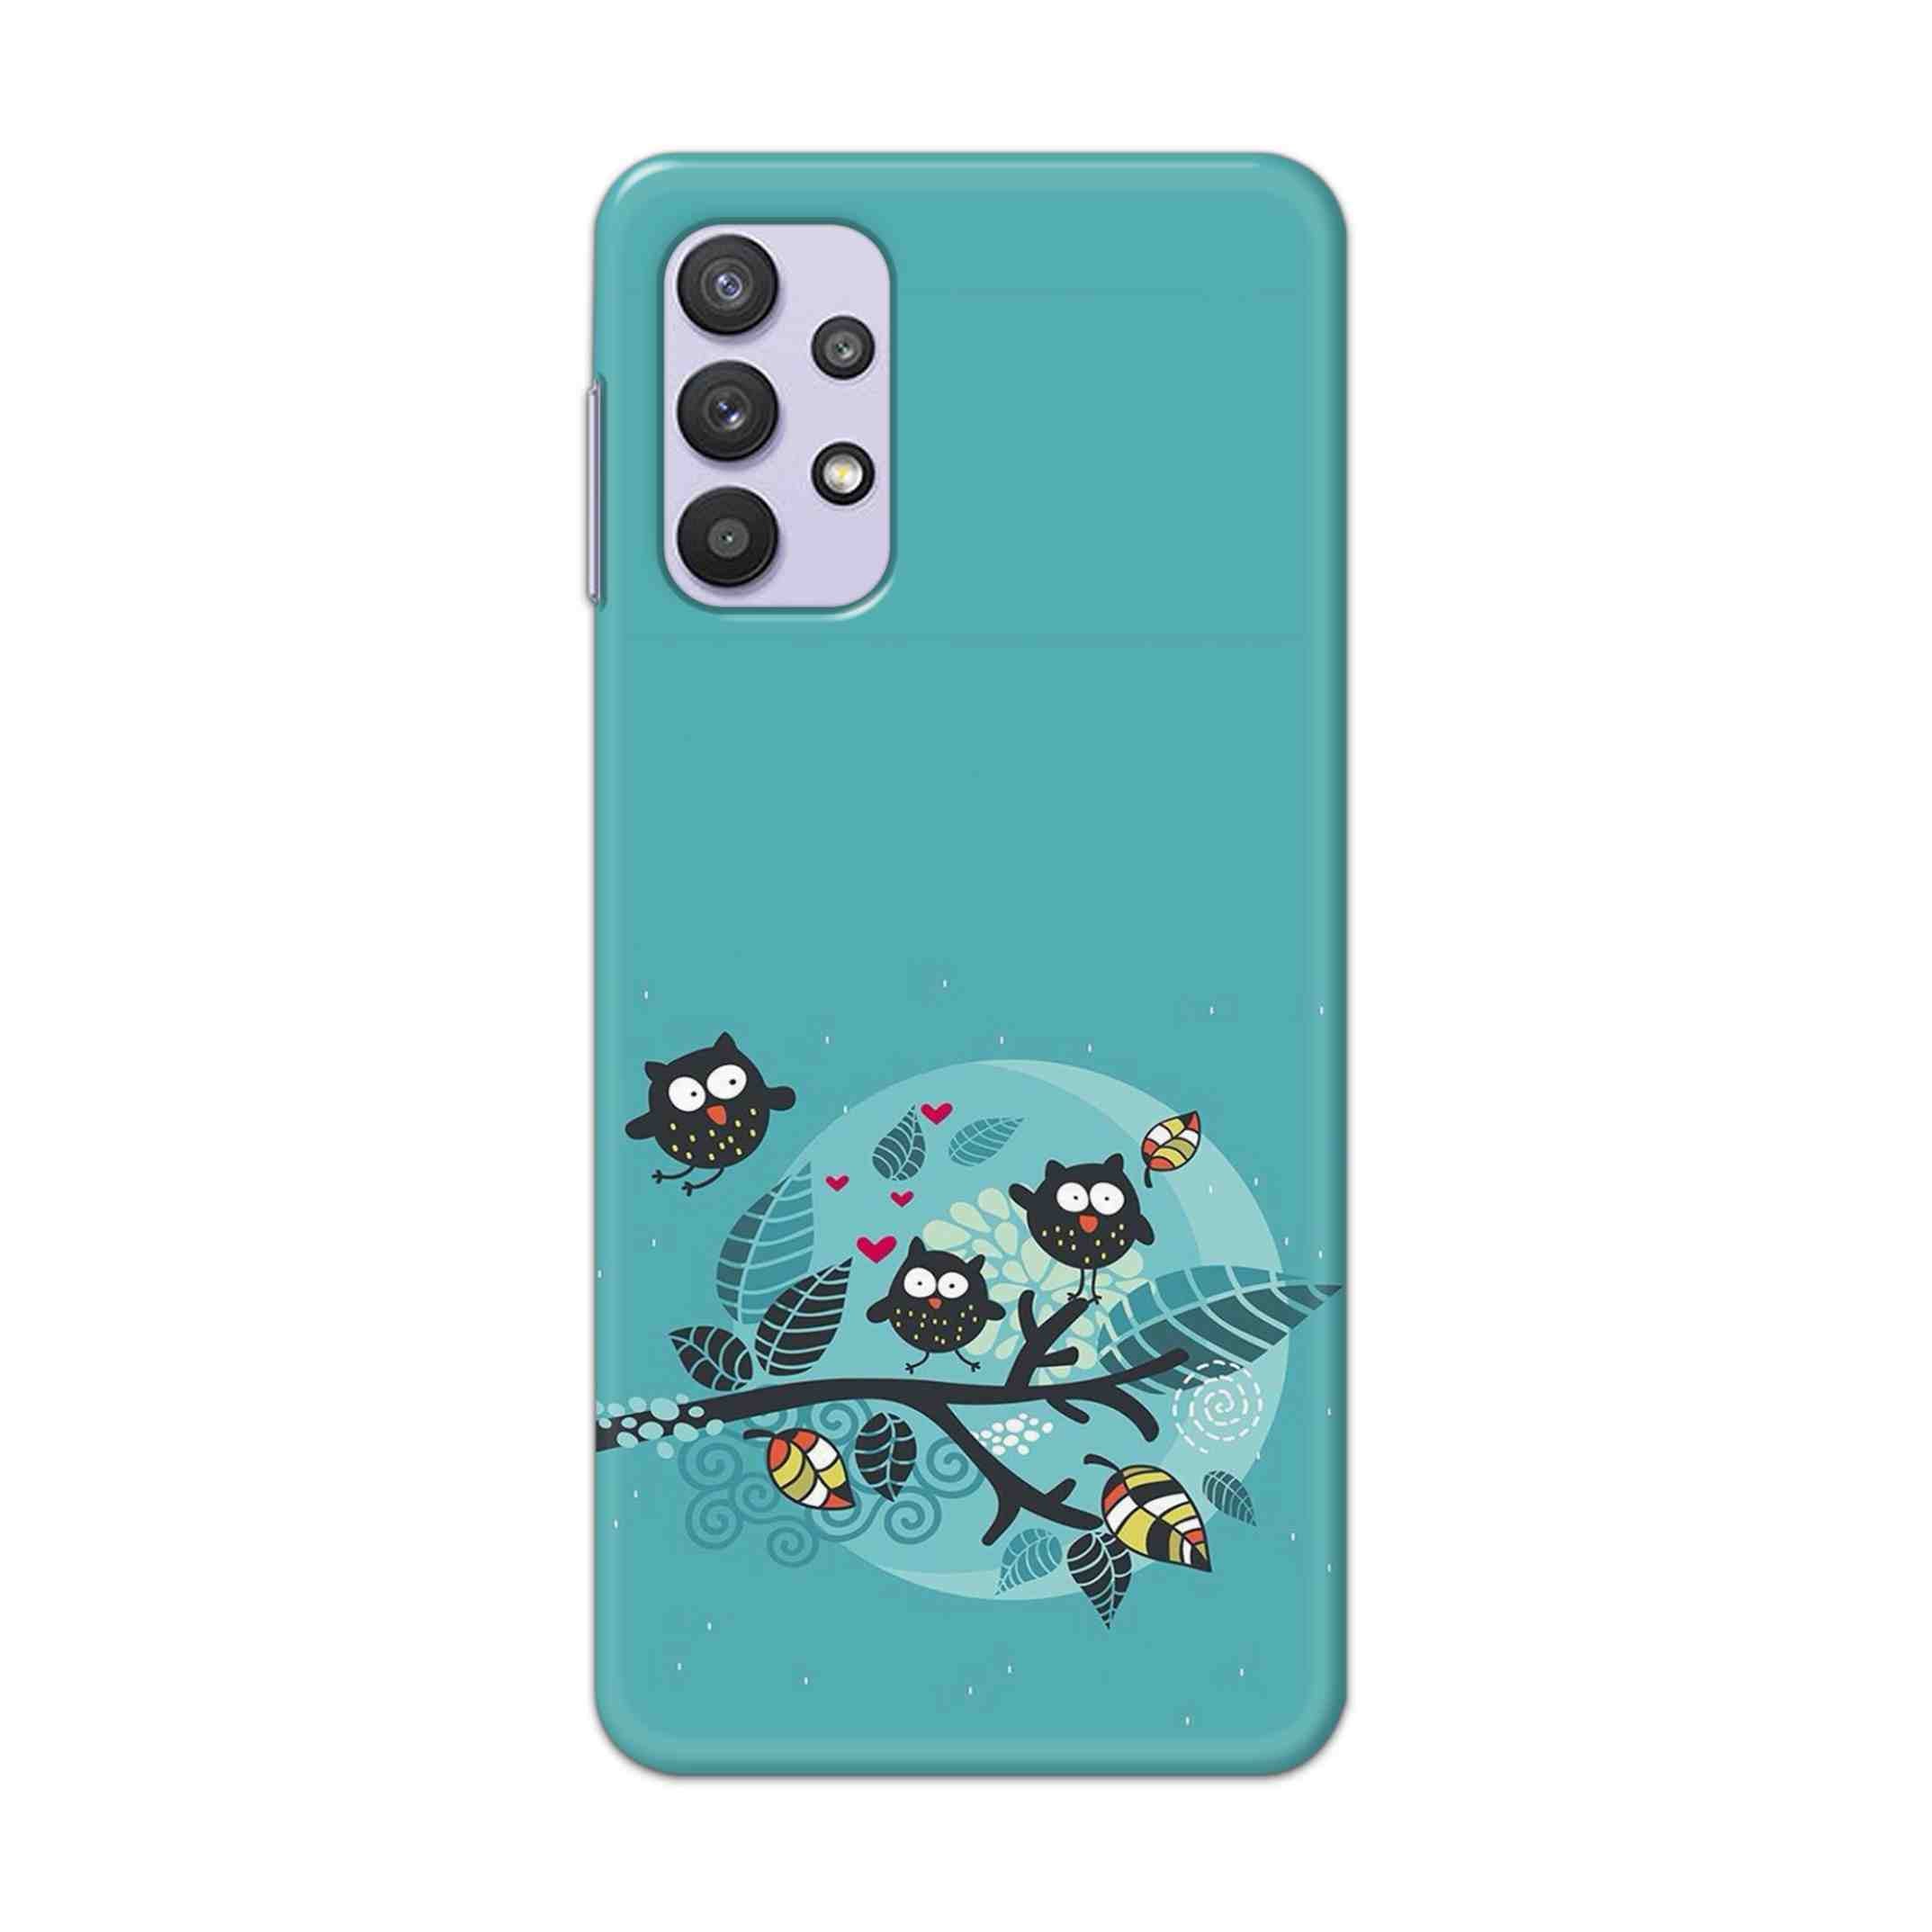 Buy Owl Hard Back Mobile Phone Case Cover For Samsung A32 4G Online